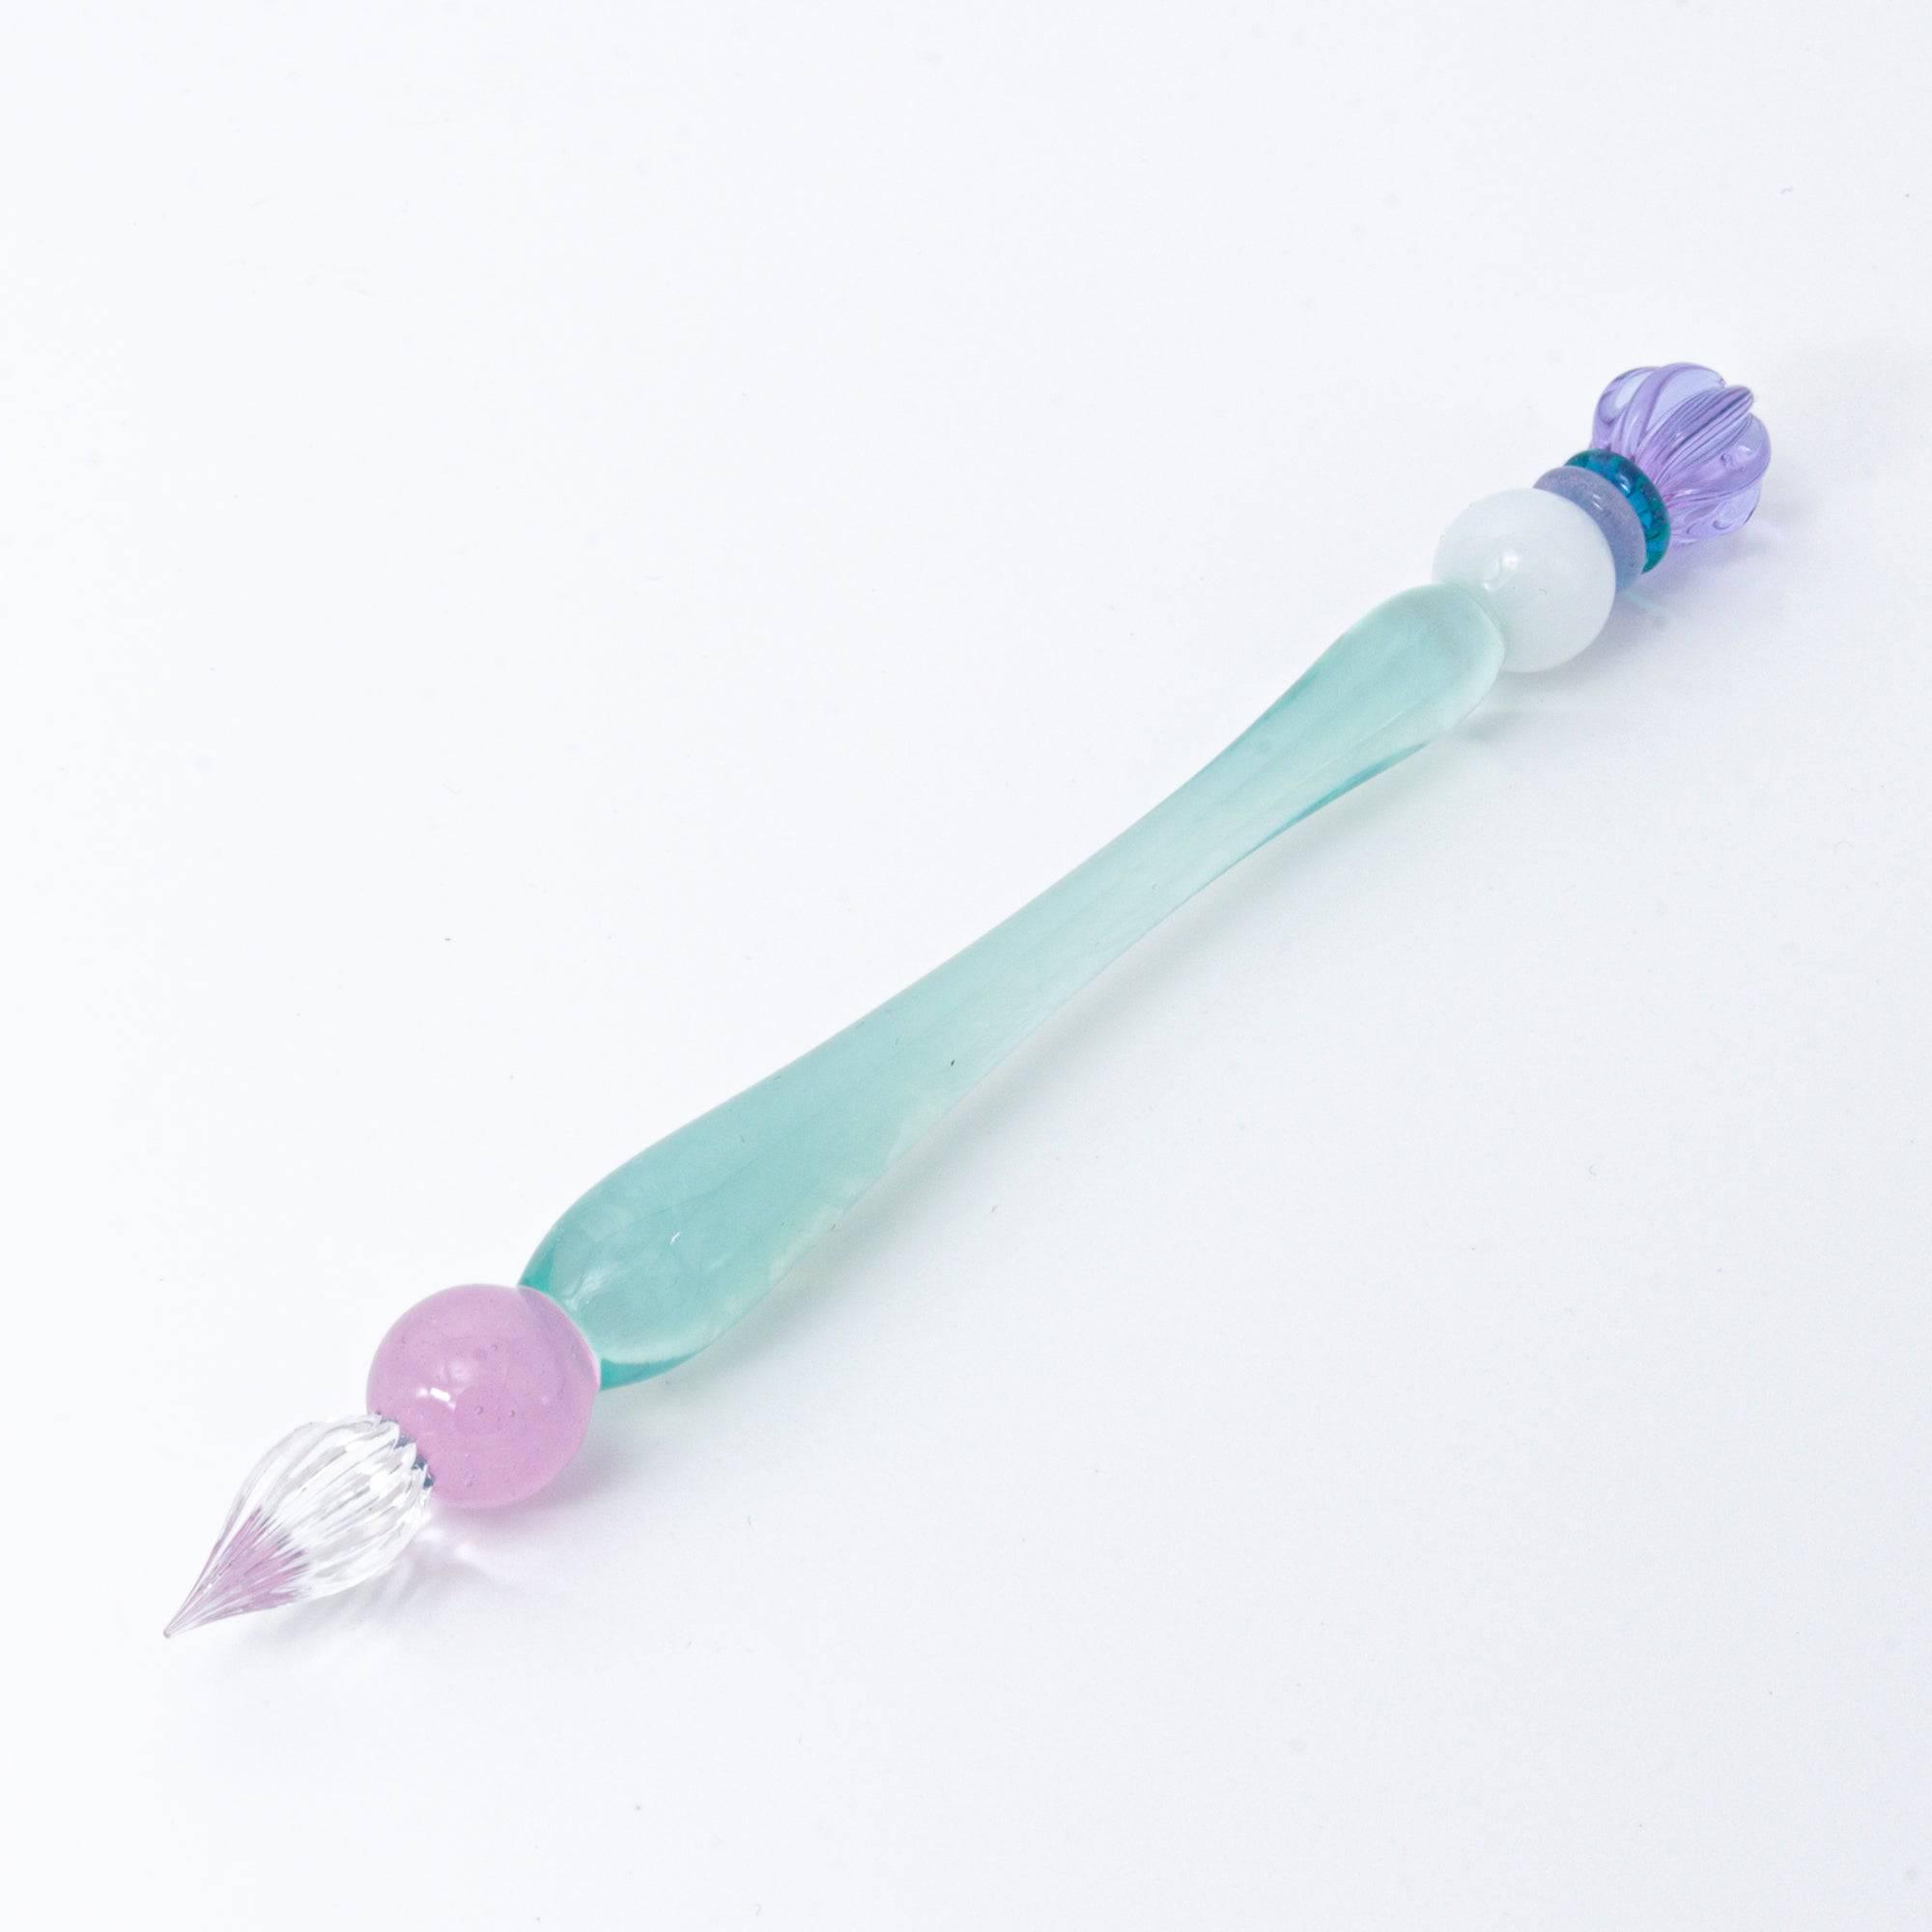 King's Scepter Candy Glass Dip Pen - Guridrops - Komorebi Stationery